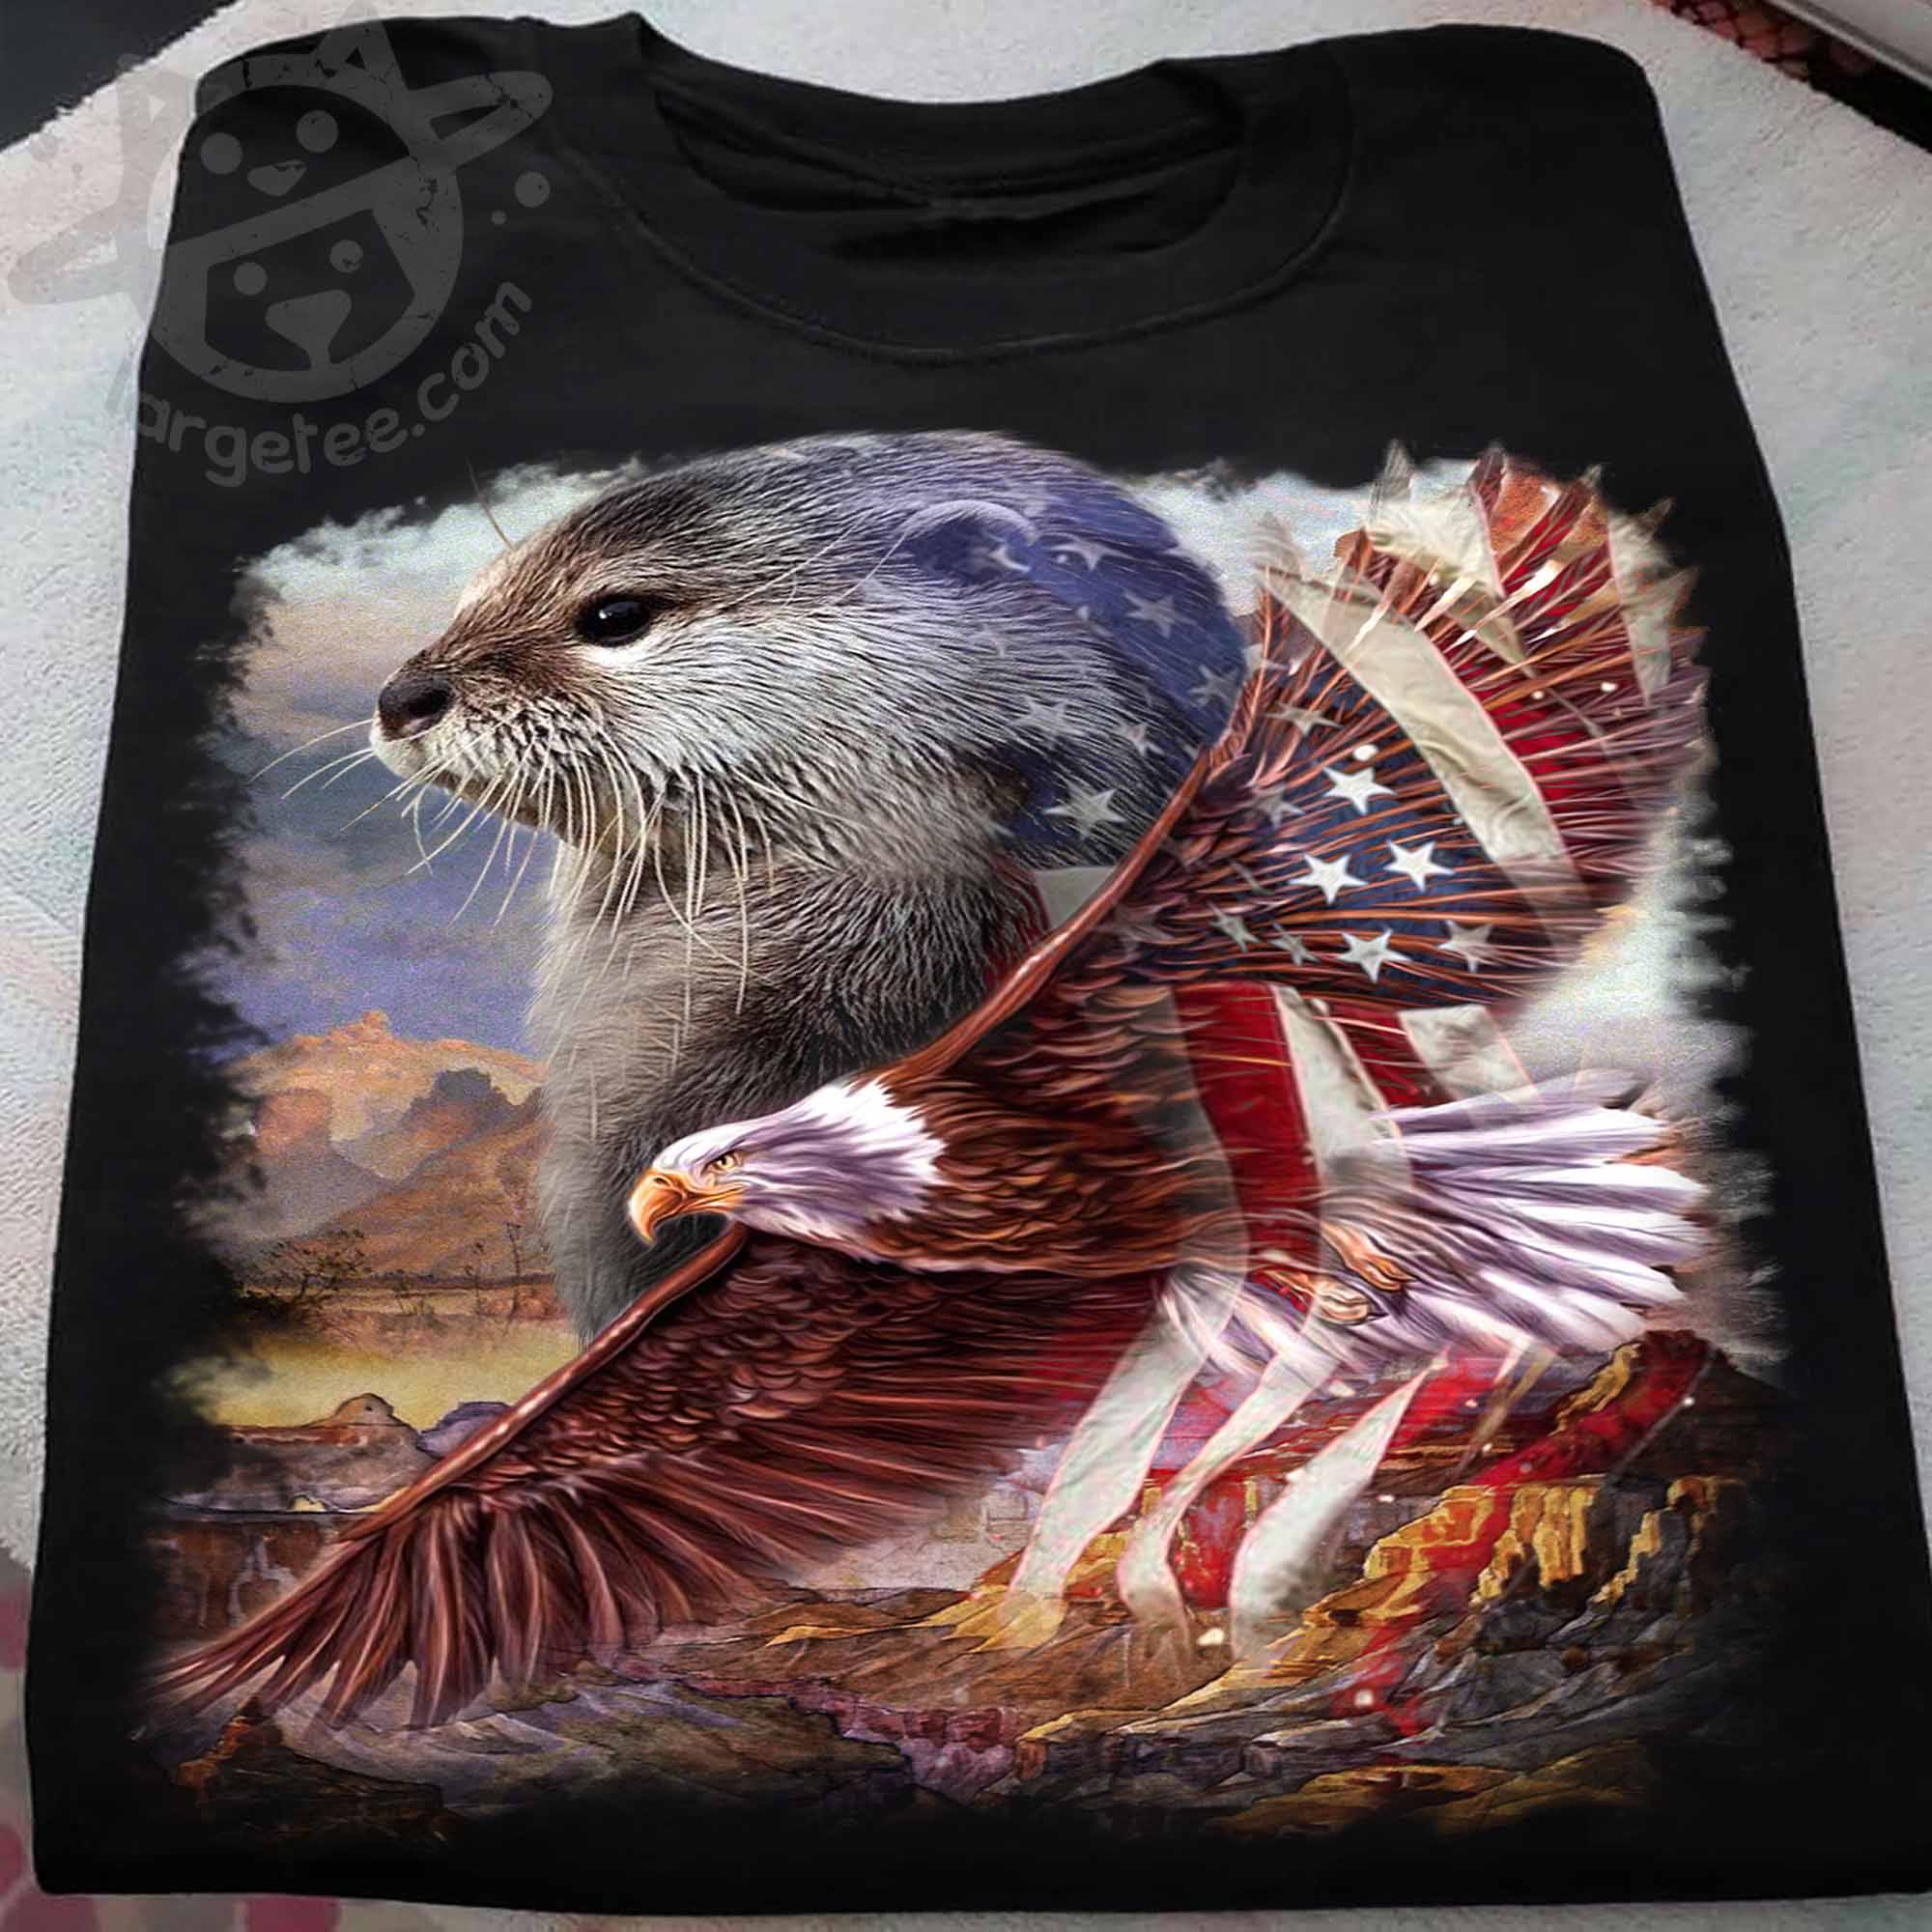 America beaver and eagle symbol of America - America flag